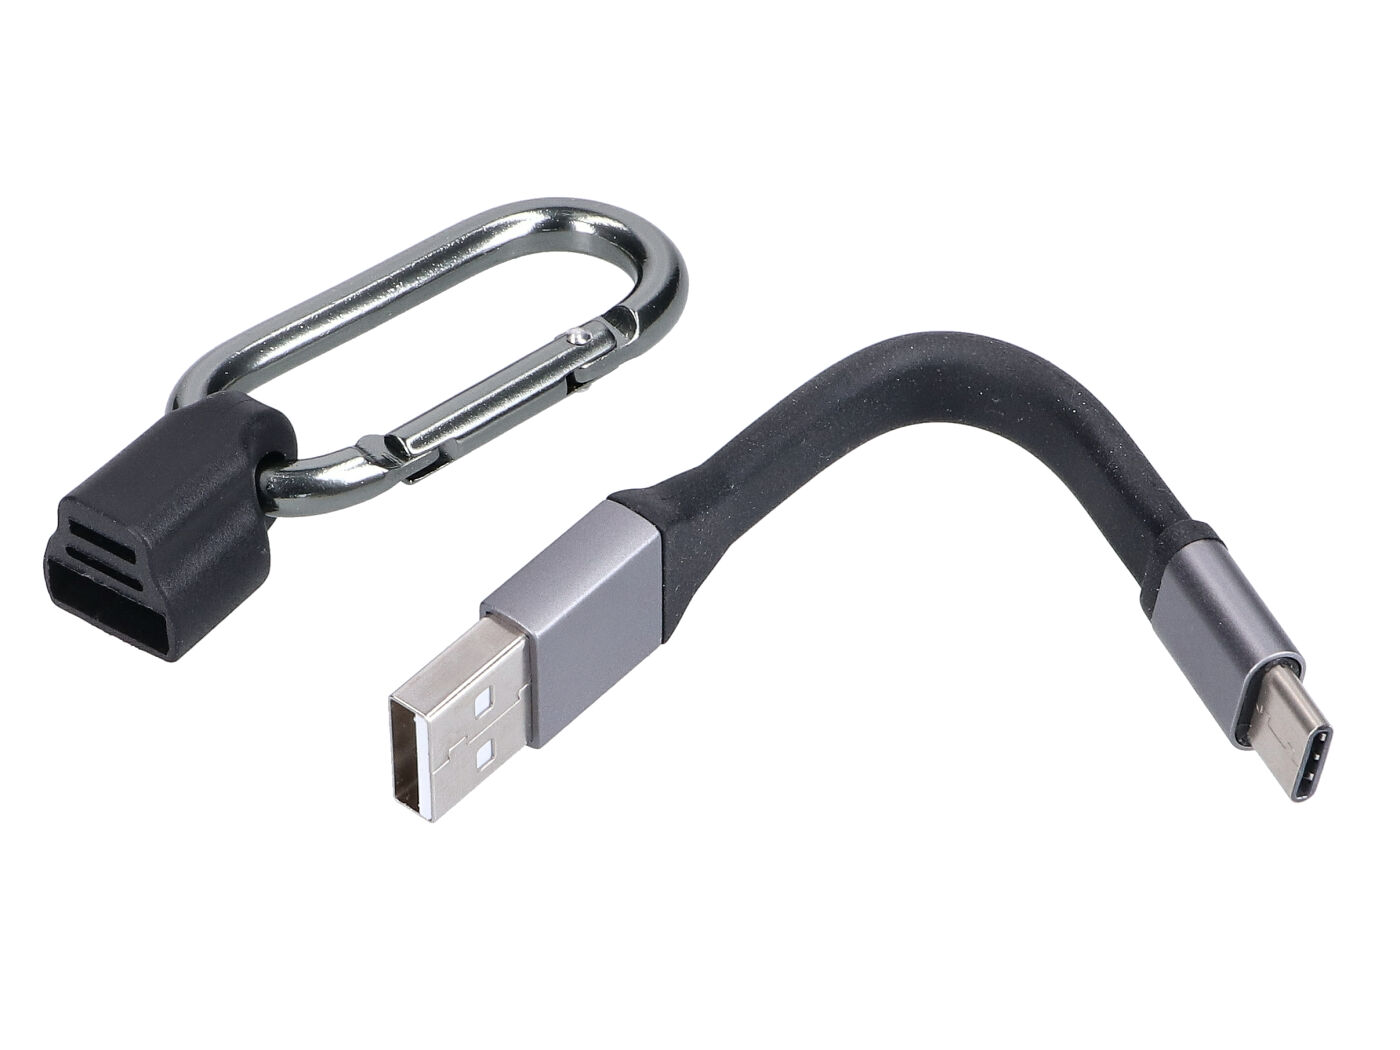 charging cable keychain 10cm USB USB-C plug